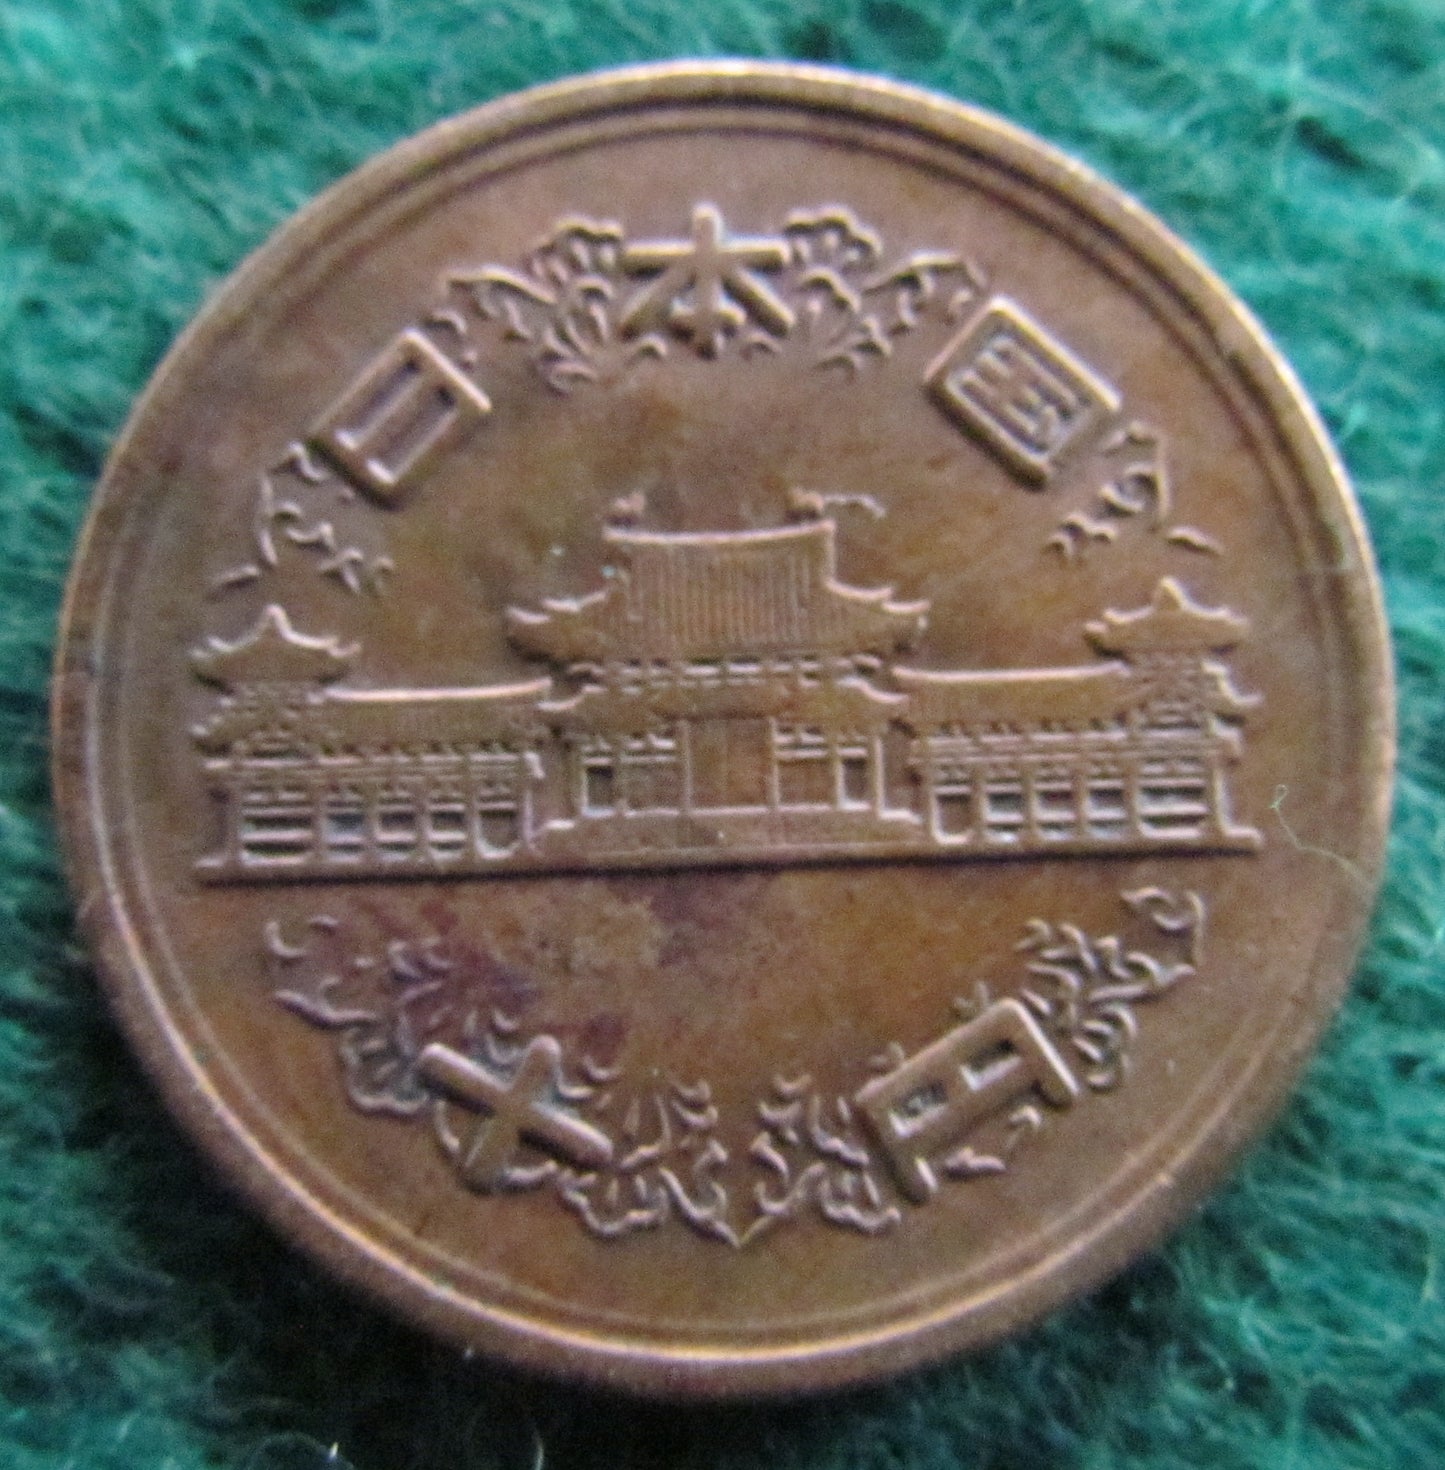 Japanese 1953 10 Yen Coin - Circulated